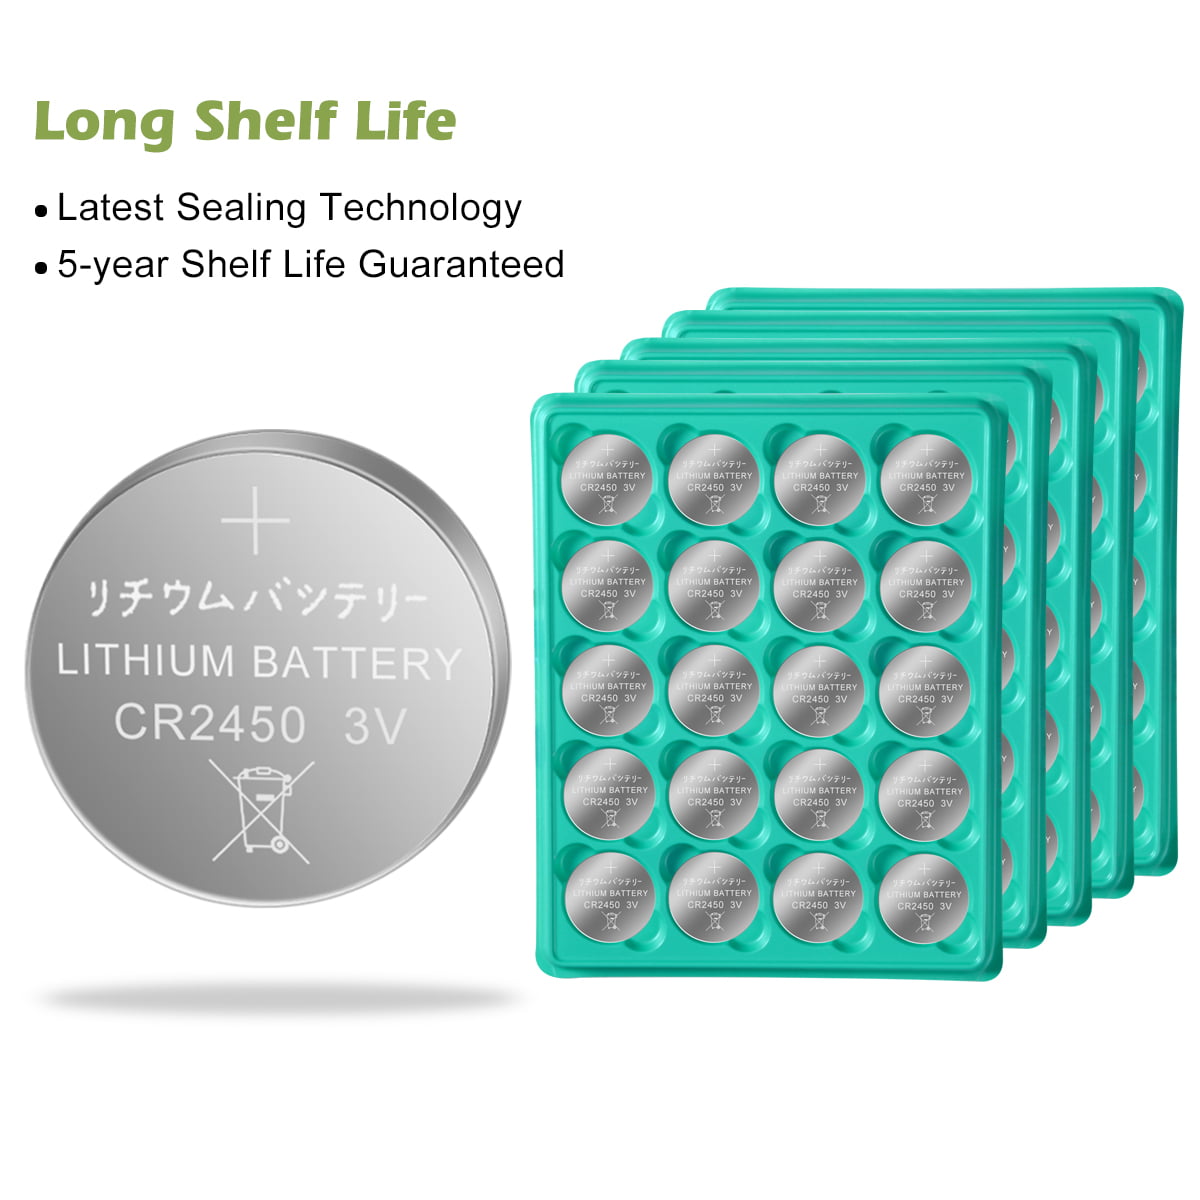 Lithium Metal Batteries CR2450, 3V, 550mAH - 5 Pack - Uyuni Lighting